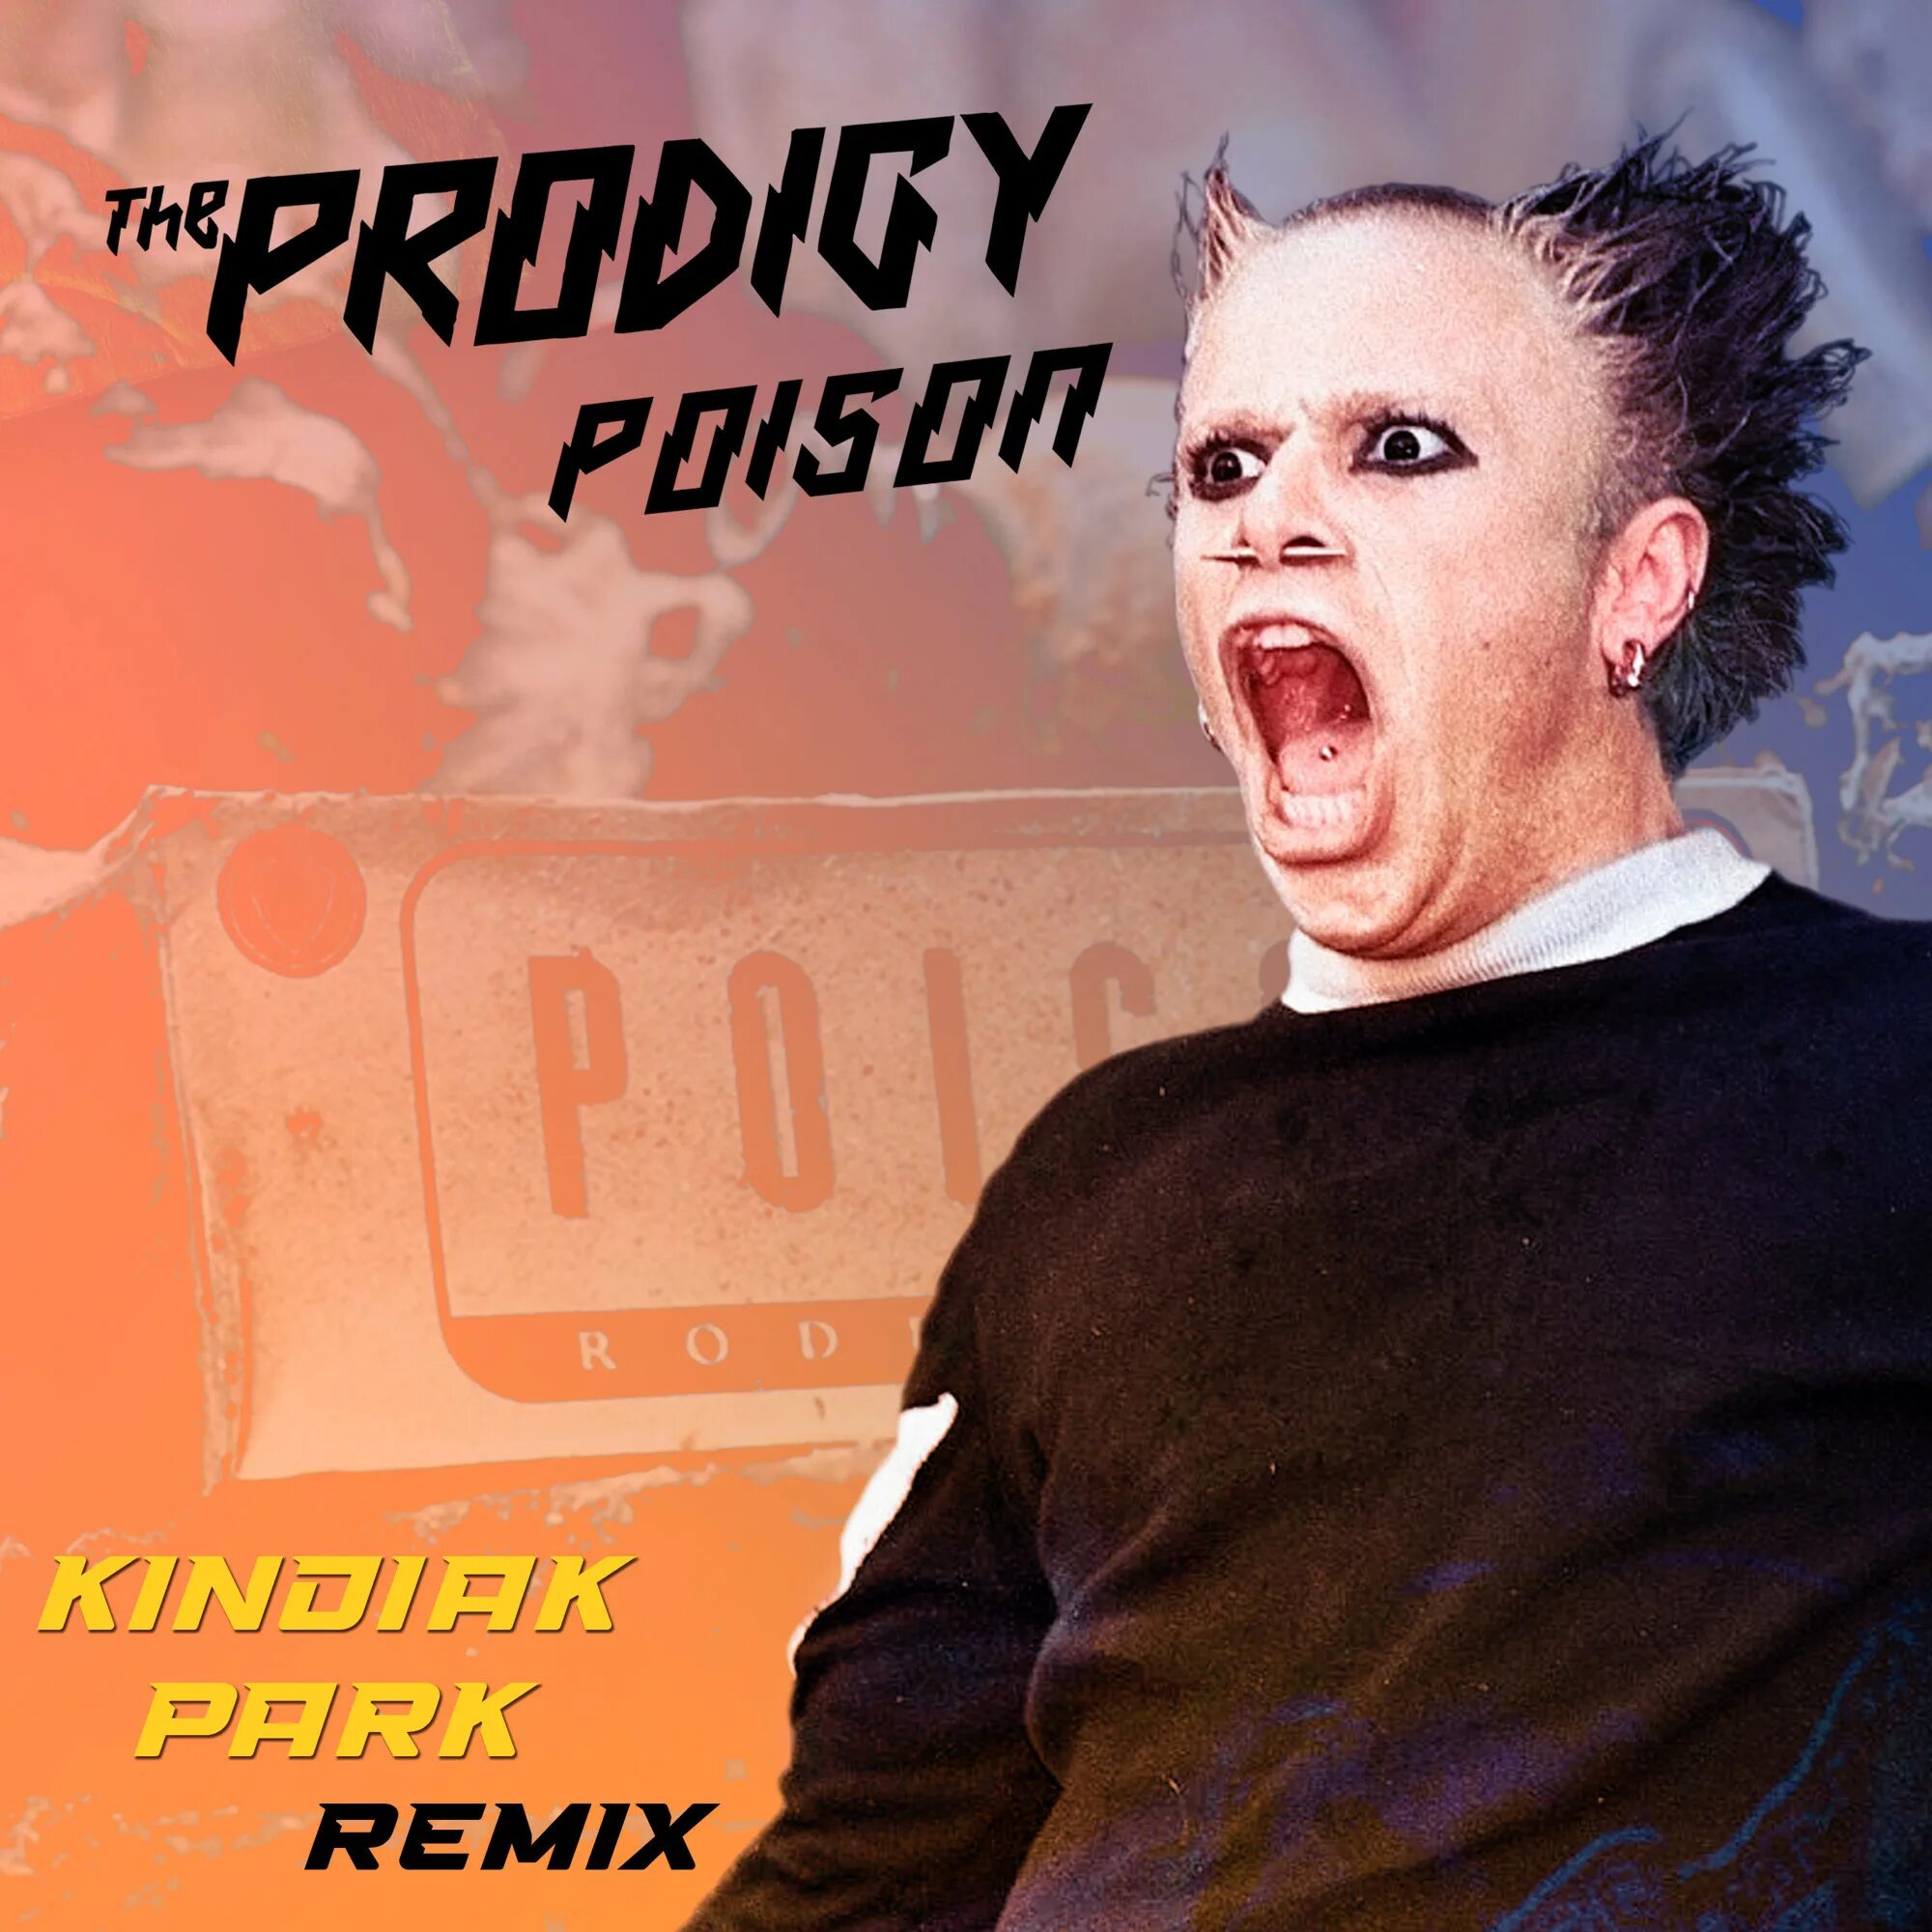 Prodigy diesel power instrumental pain remix. Prodigy Poison. Продиджи 2021. The Prodigy Poison 1995. Альбом: Poison the Prodigy.